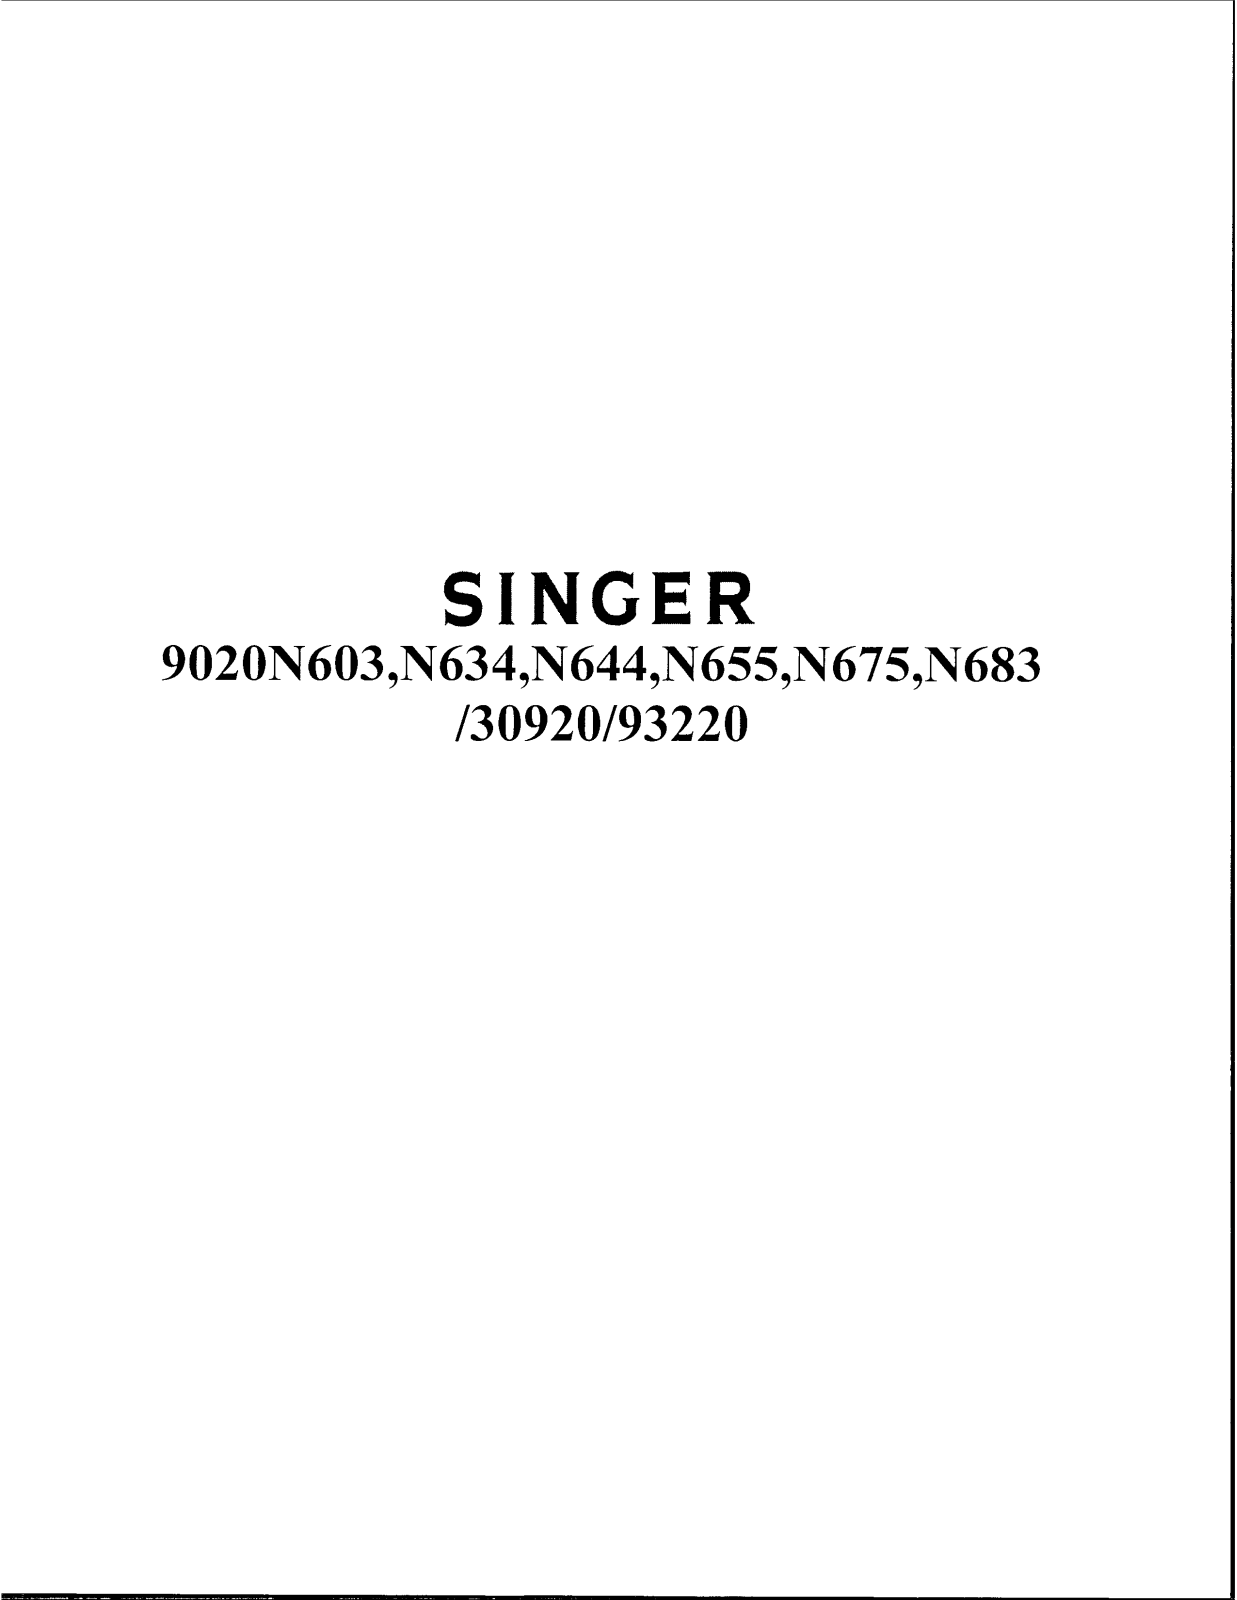 Singer 9020 User Manual